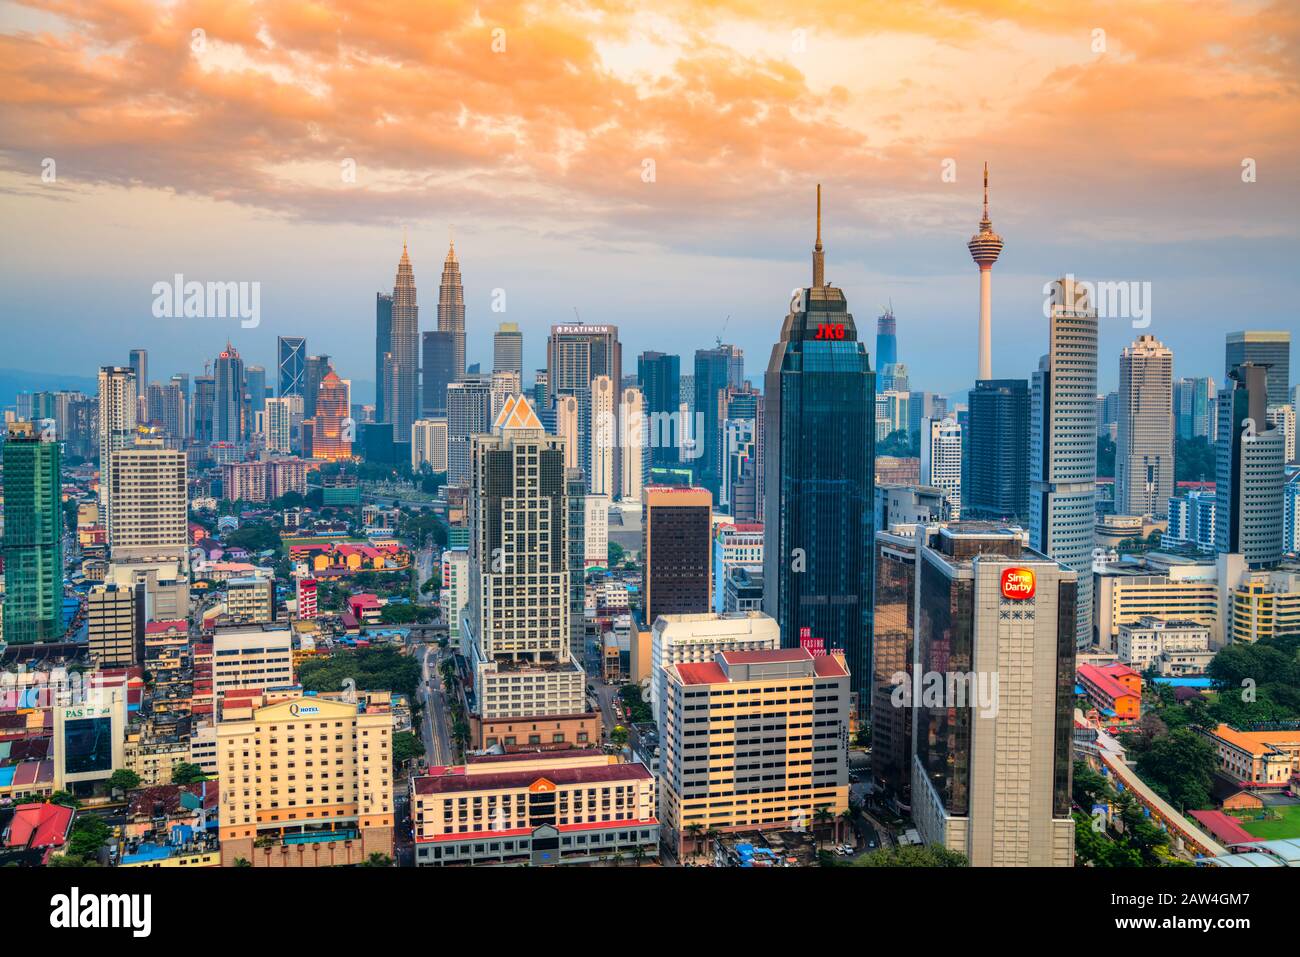 Kuala LUMPUR, MALESIA - 19 FEBBRAIO 2018: Skyline di Kuala Lumpur, con le famose torri gemelle Petronas e la Kl Tower. Foto Stock